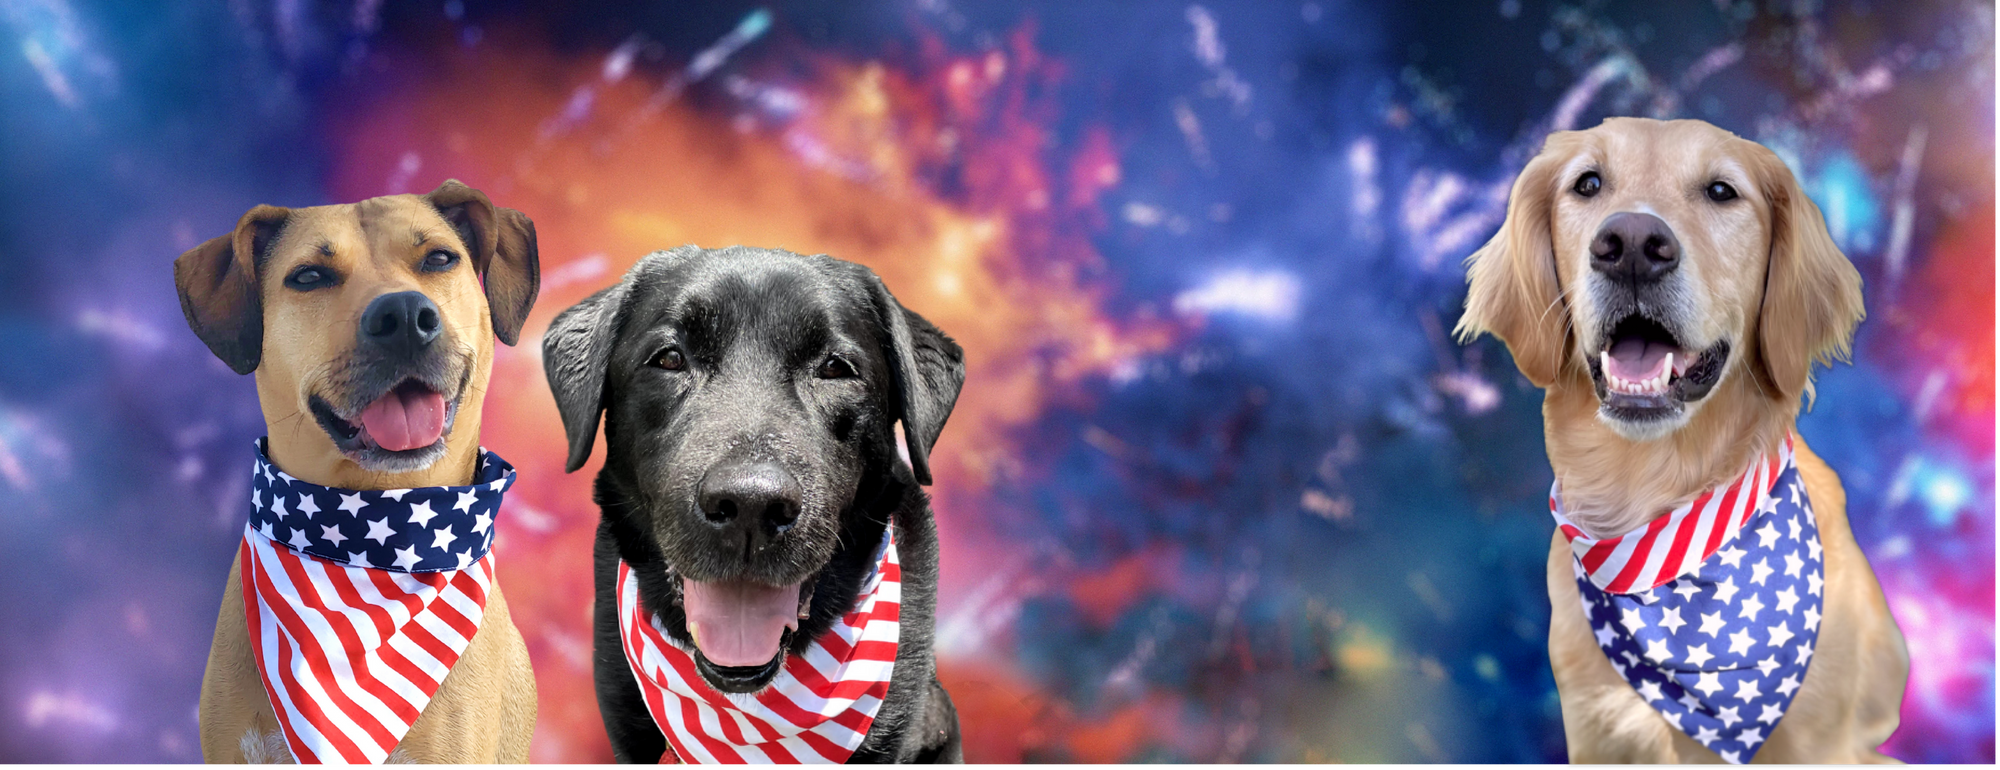 dogs in america bandanas watching fireworks 